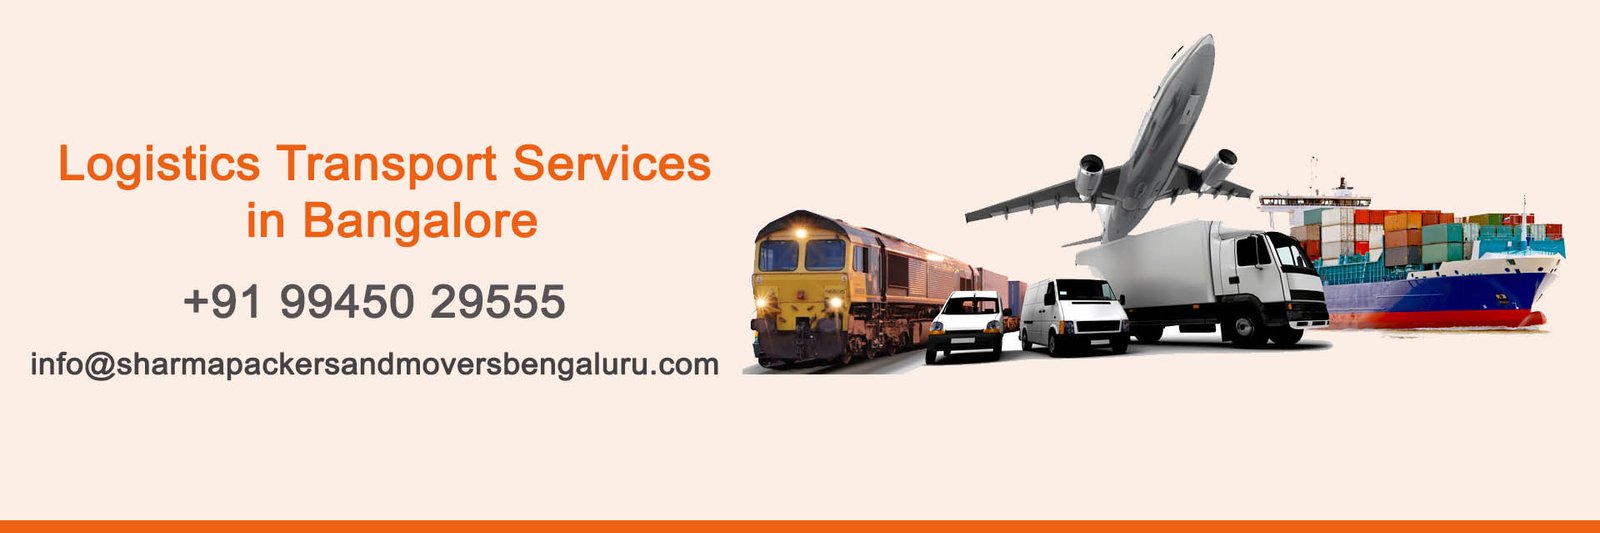 Logistics Transport Services in Bangalore